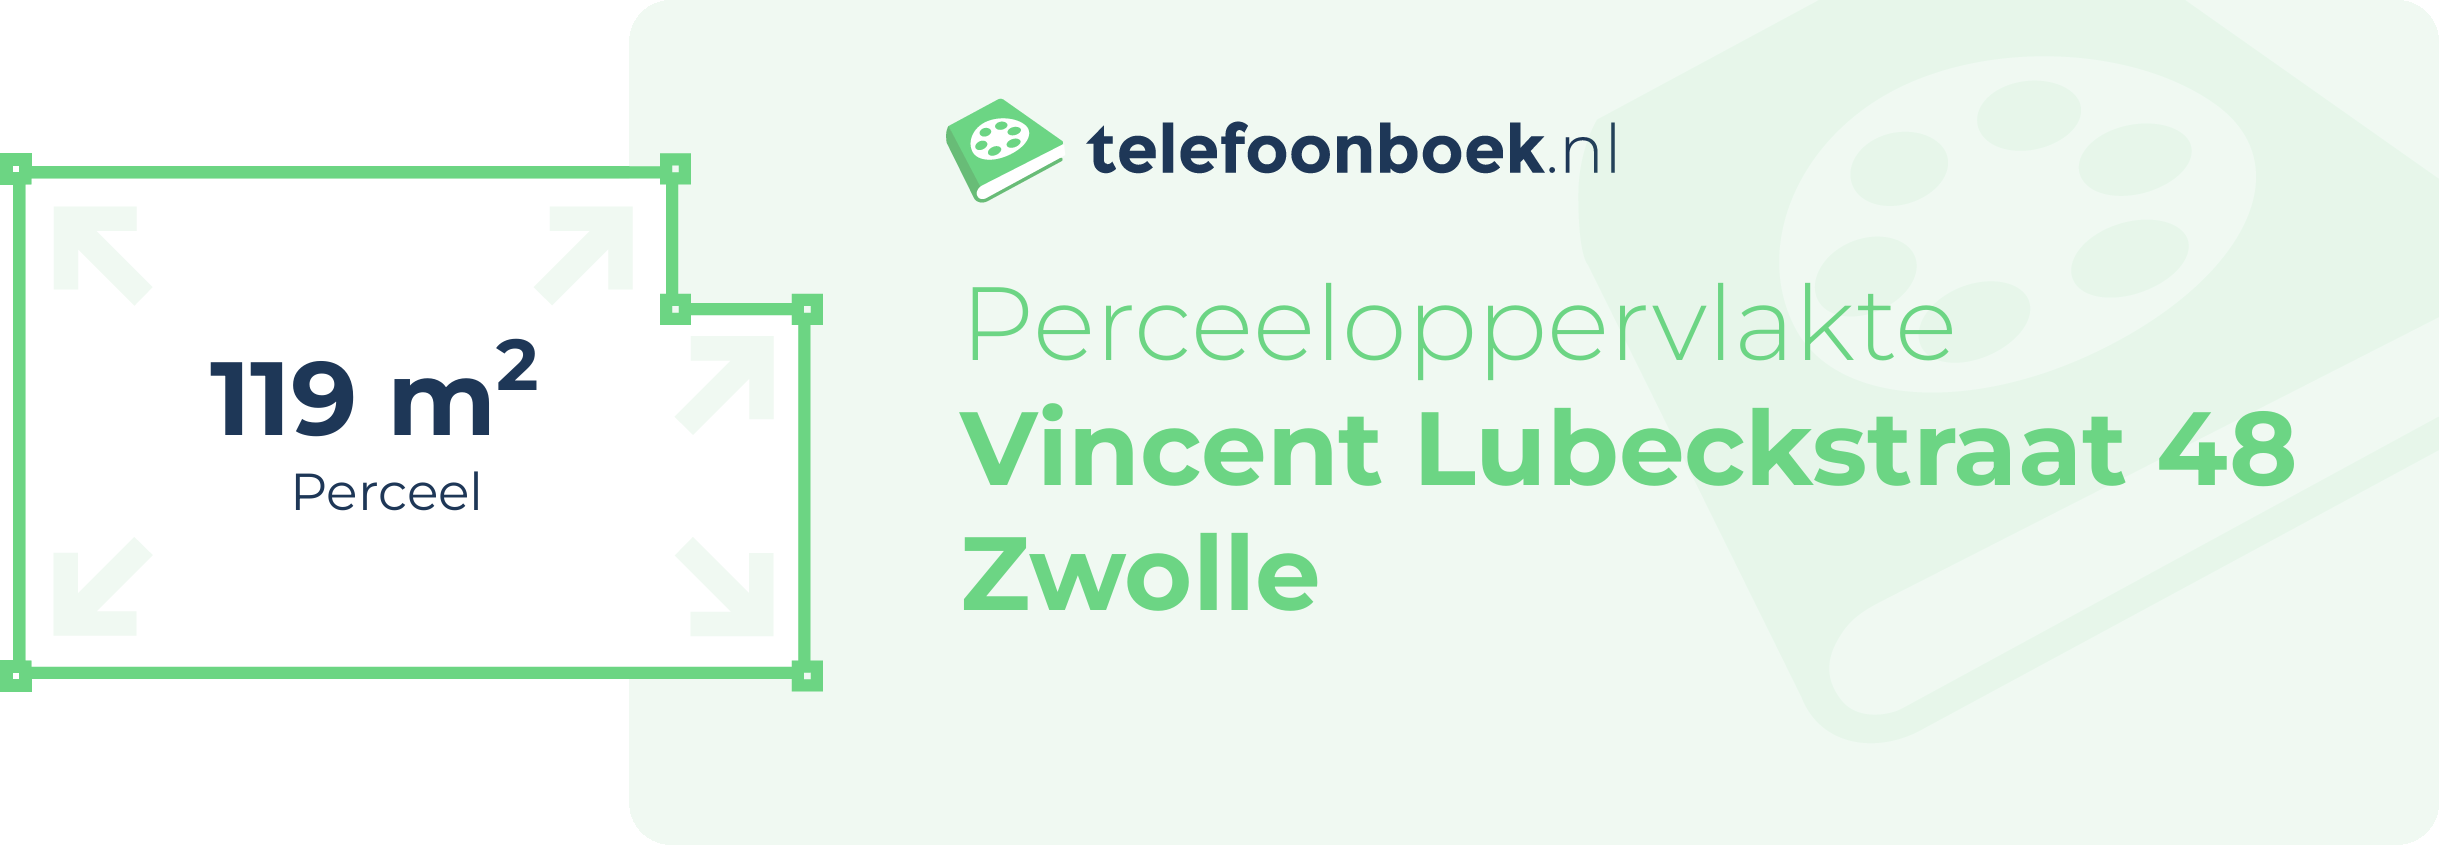 Perceeloppervlakte Vincent Lubeckstraat 48 Zwolle